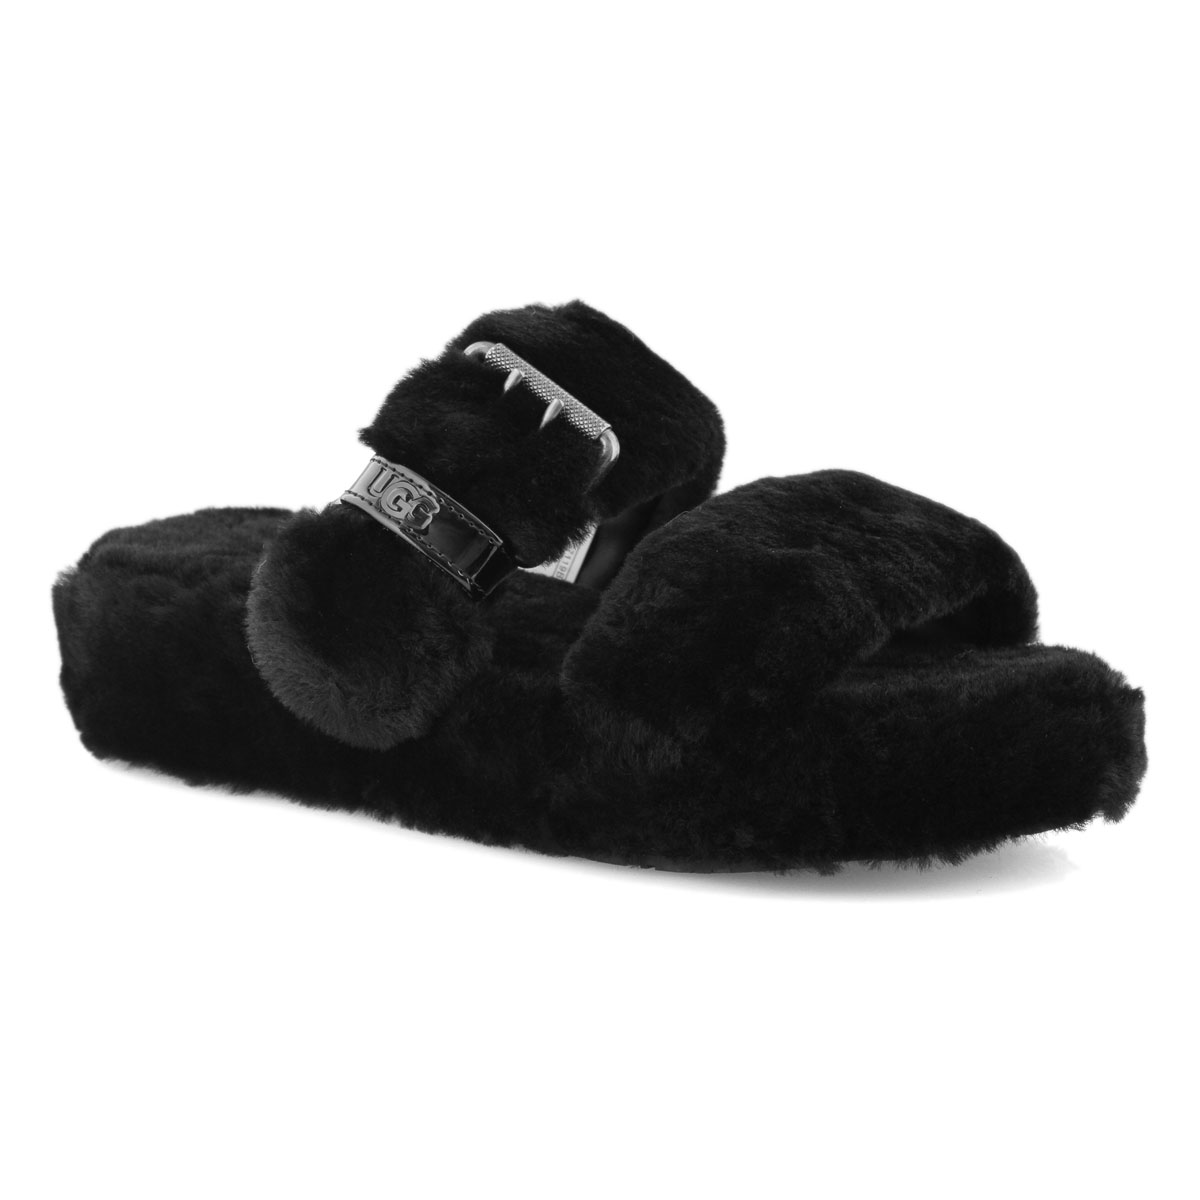 softmoc ugg slippers